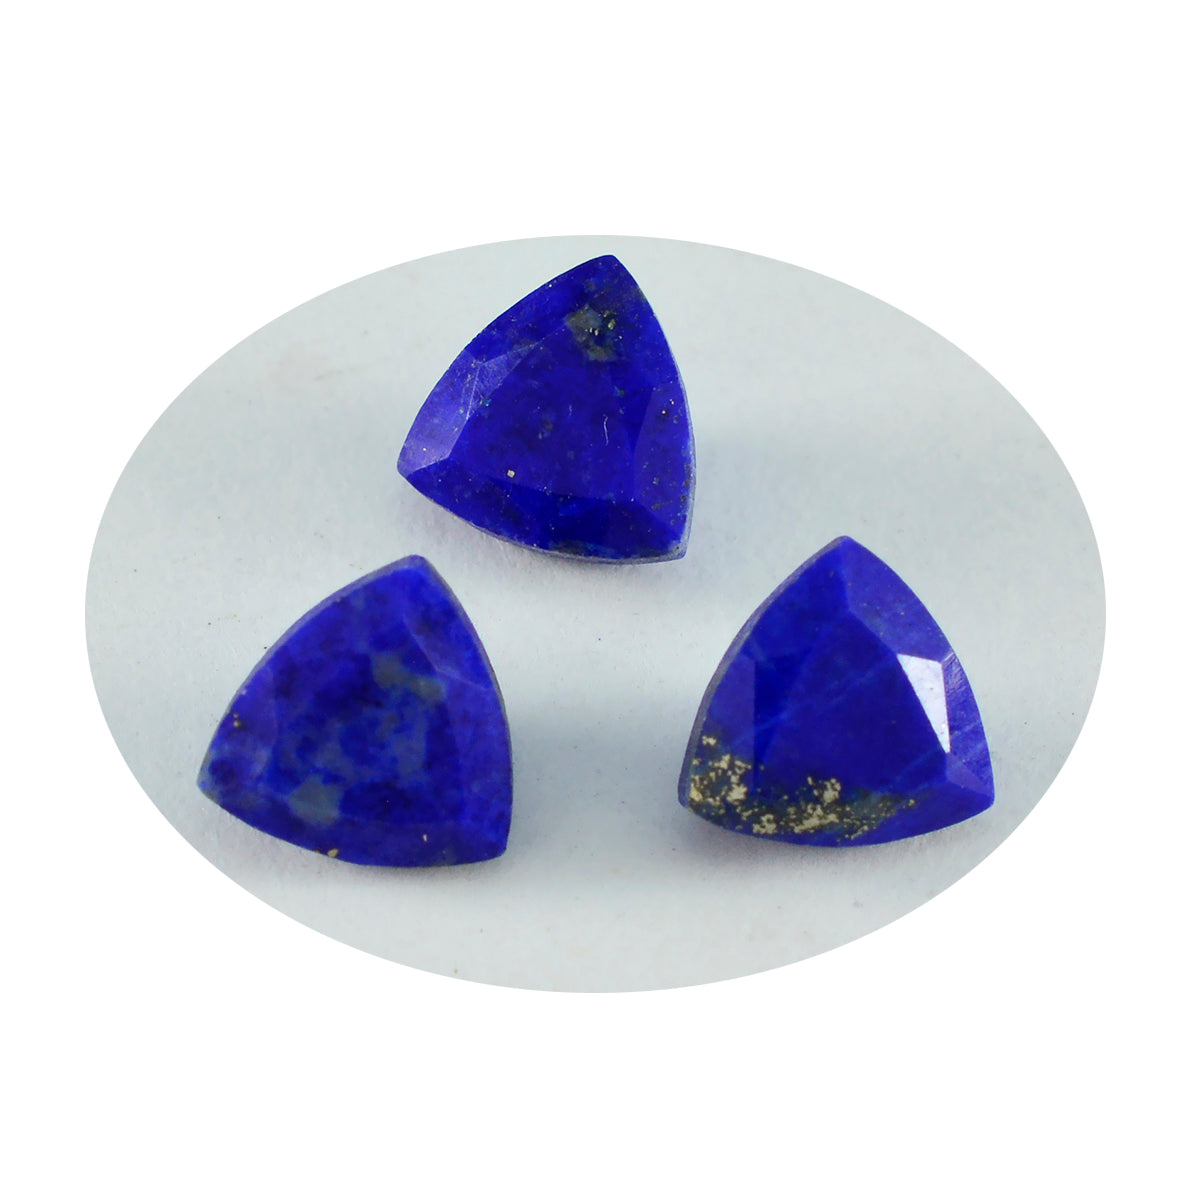 Riyogems 1PC Real Blue Lapis Lazuli Faceted 12x12 mm Trillion Shape AAA Quality Stone